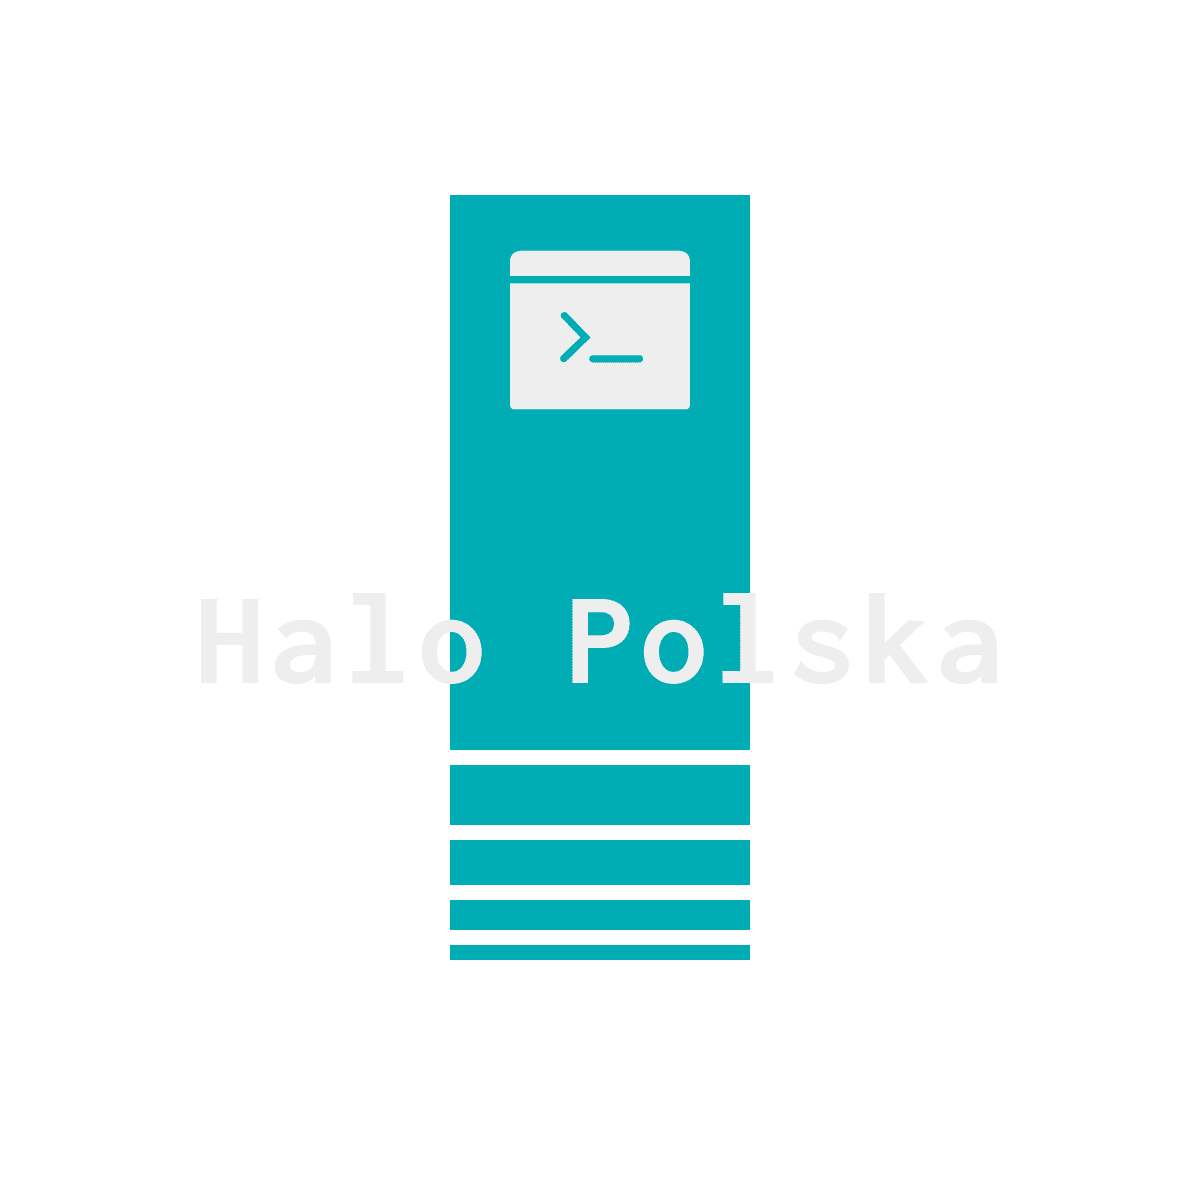 Halo Polska